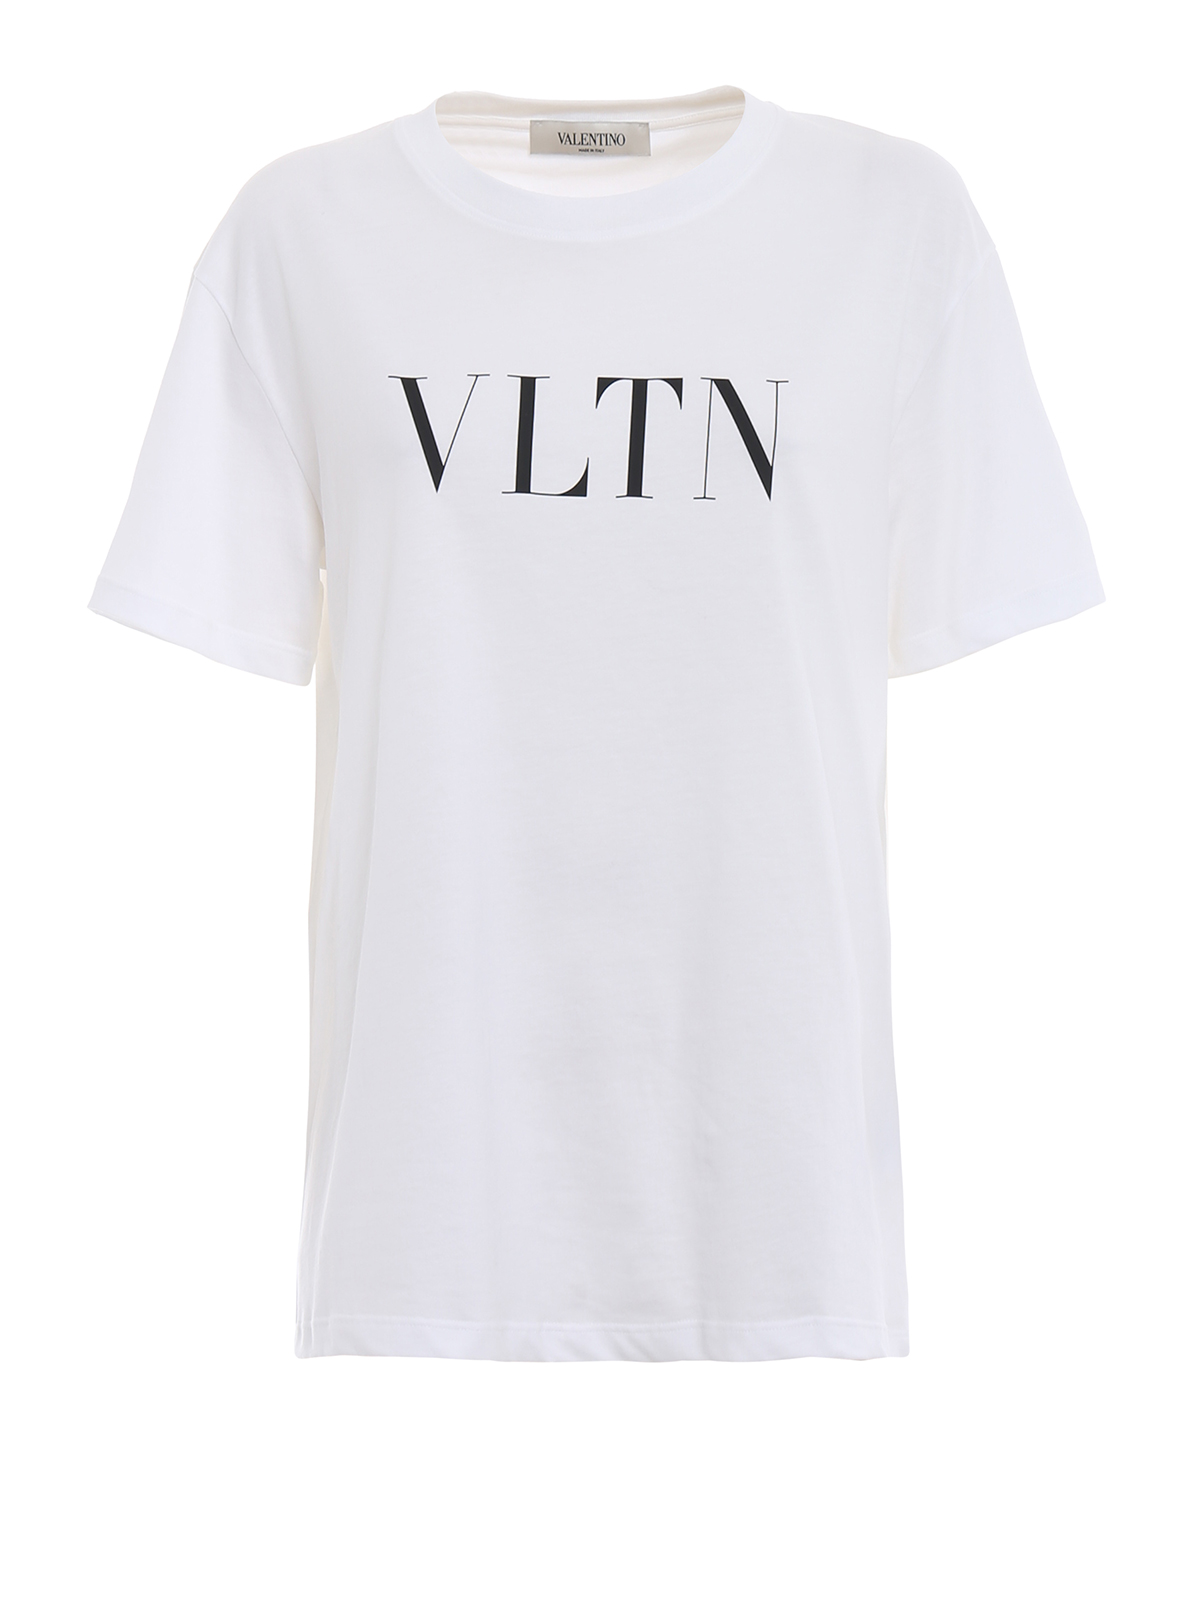 T-shirts Valentino - VLTN white cotton Tee - RB3MG07D3V6A01 | iKRIX.com